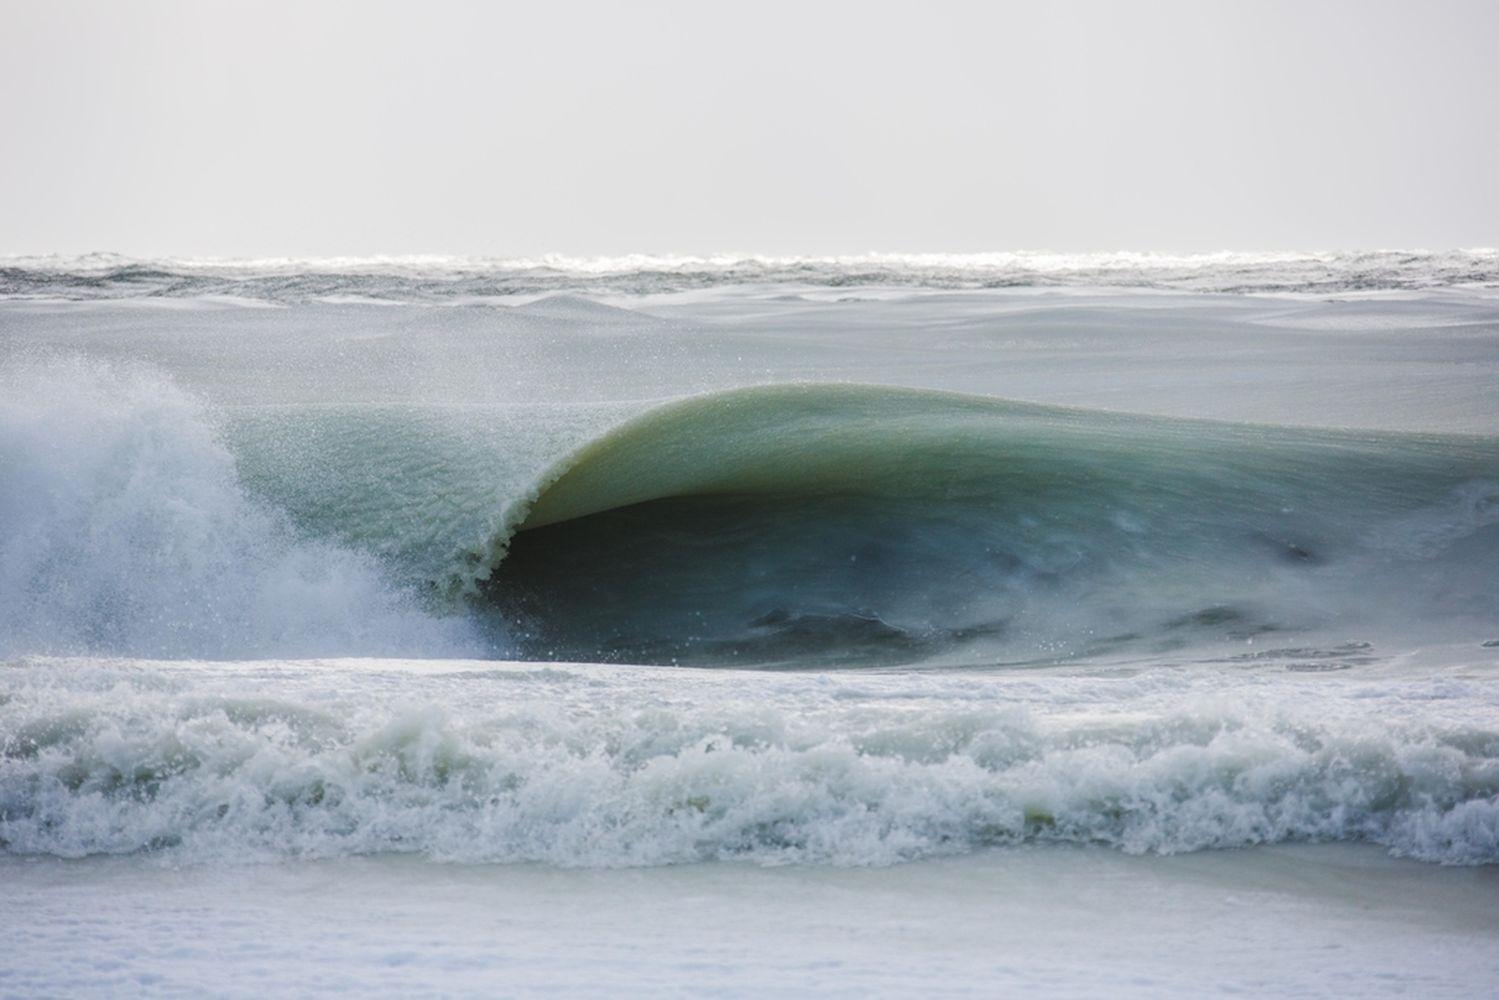 Jonathan Nimerfroh Landscape Photograph - Beach Break Bliss / Nantucket Island Photography / Slurpee Waves